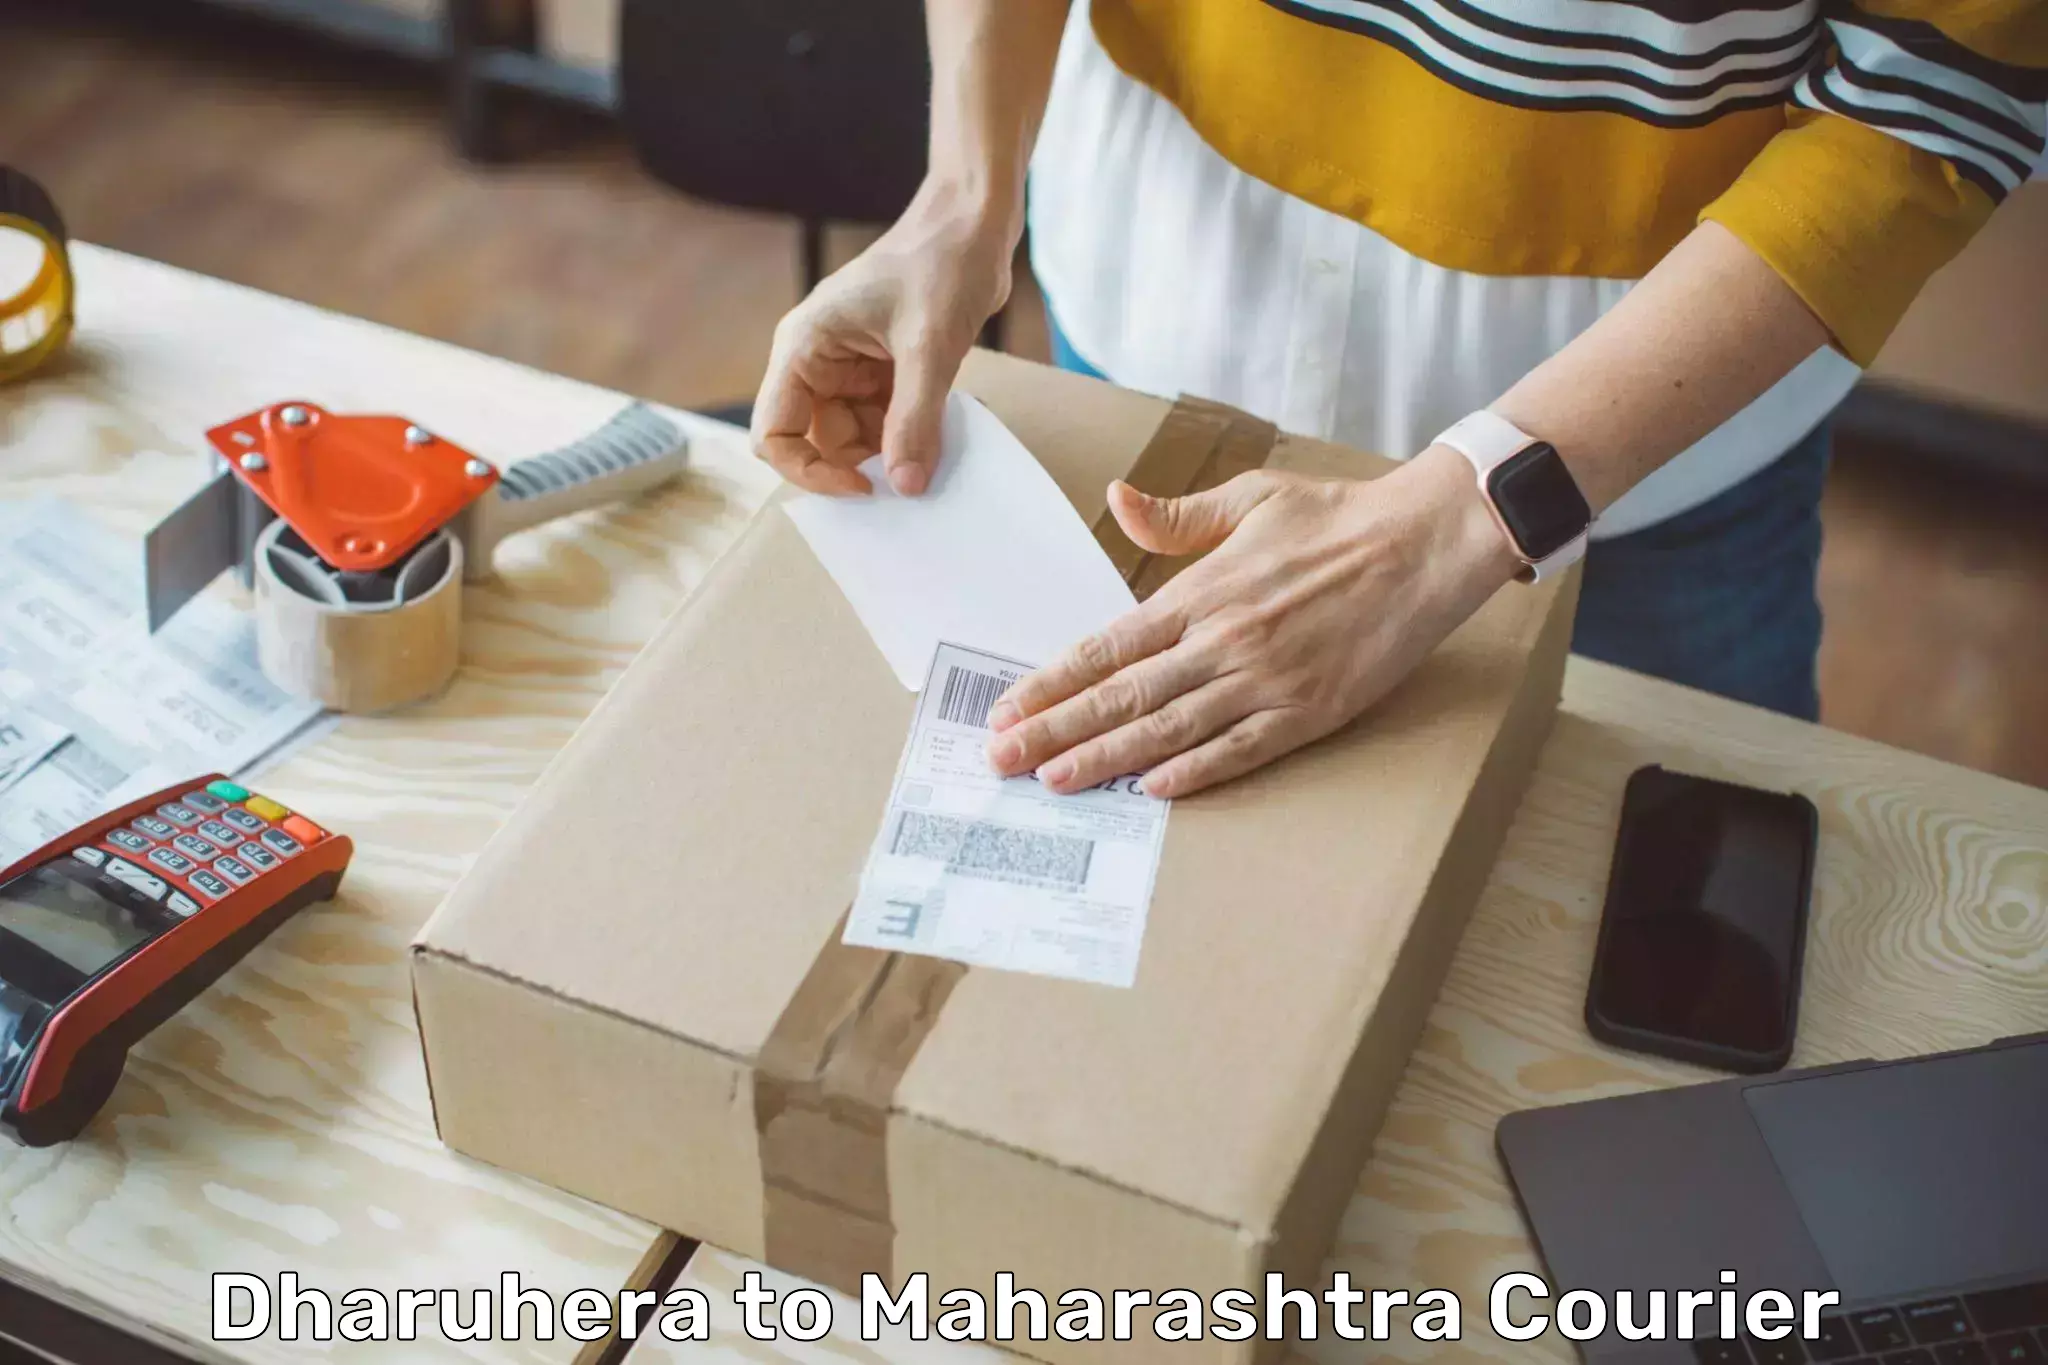 Professional courier handling Dharuhera to Lonar